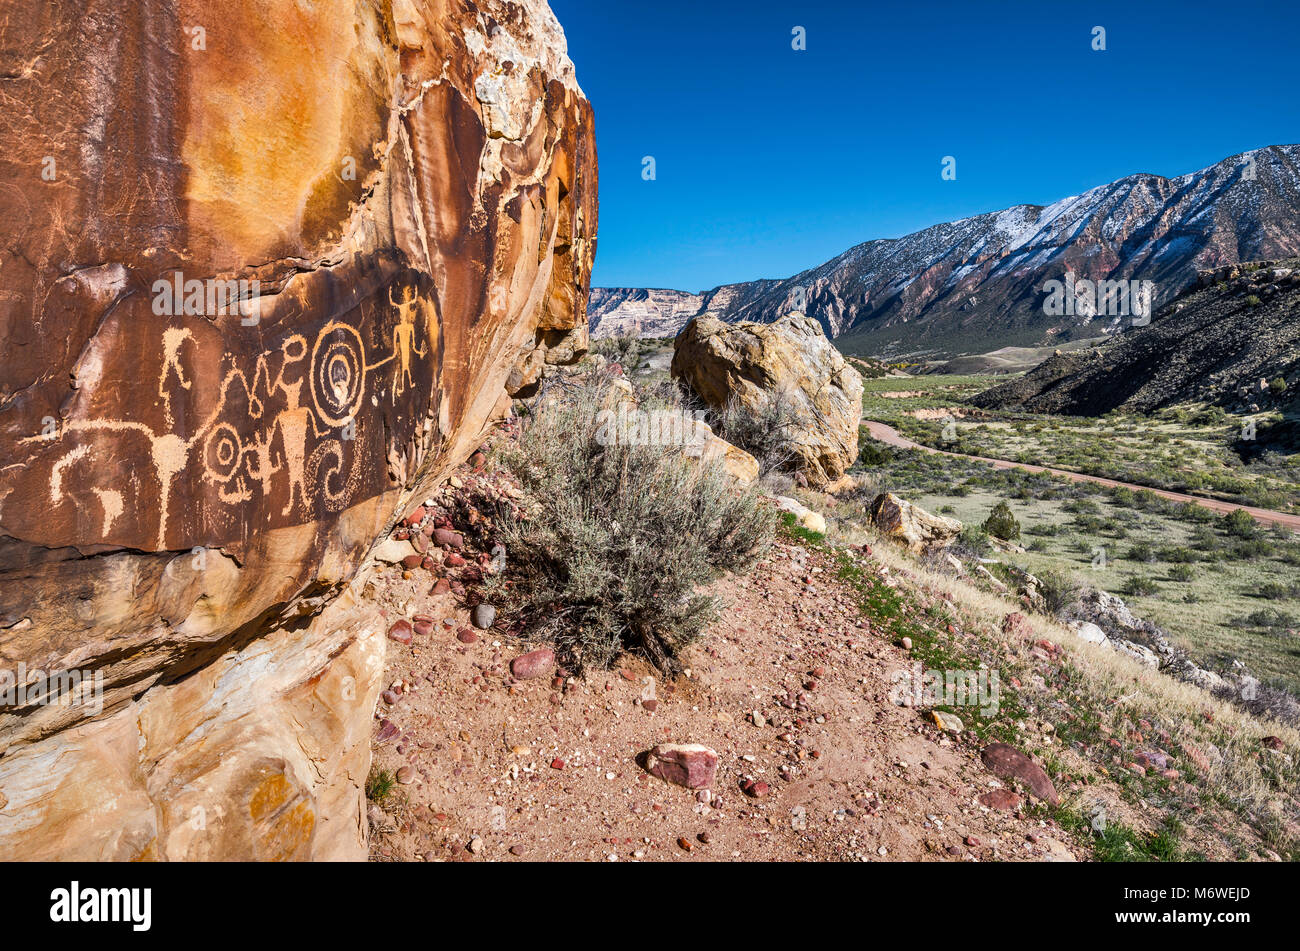 McKee Federn Petroglyphen, Fremont Kultur Rock Art Panel, Split Berg im Hintergrund, Insel der Park Road, Dinosaur National Monument, Utah, USA Stockfoto